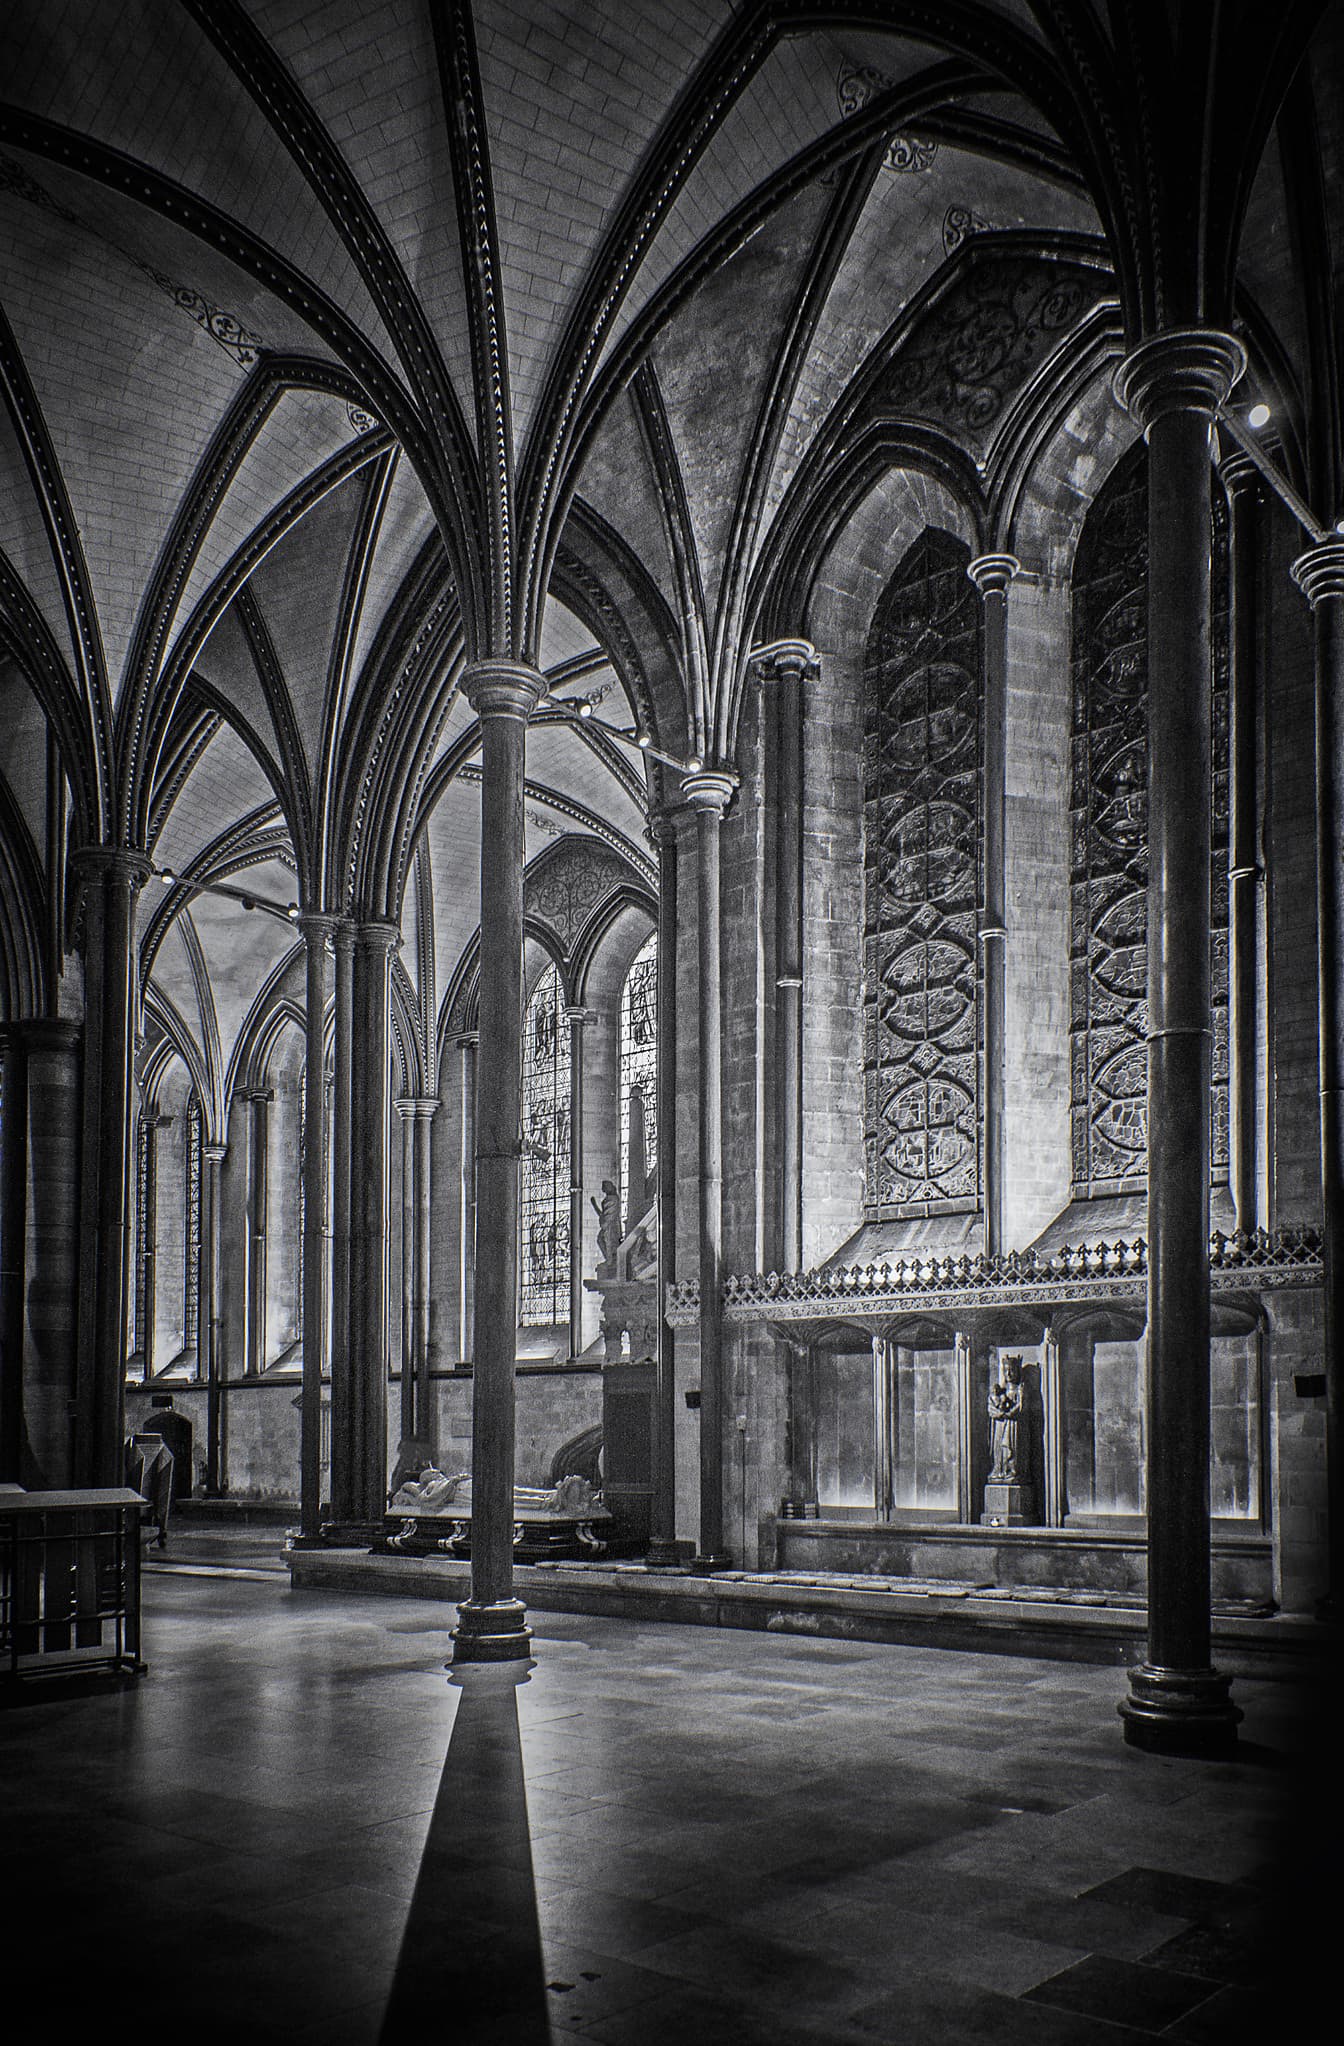 Salisbury katedral interiör i gotisk arkitektonisk stil monokromt foto